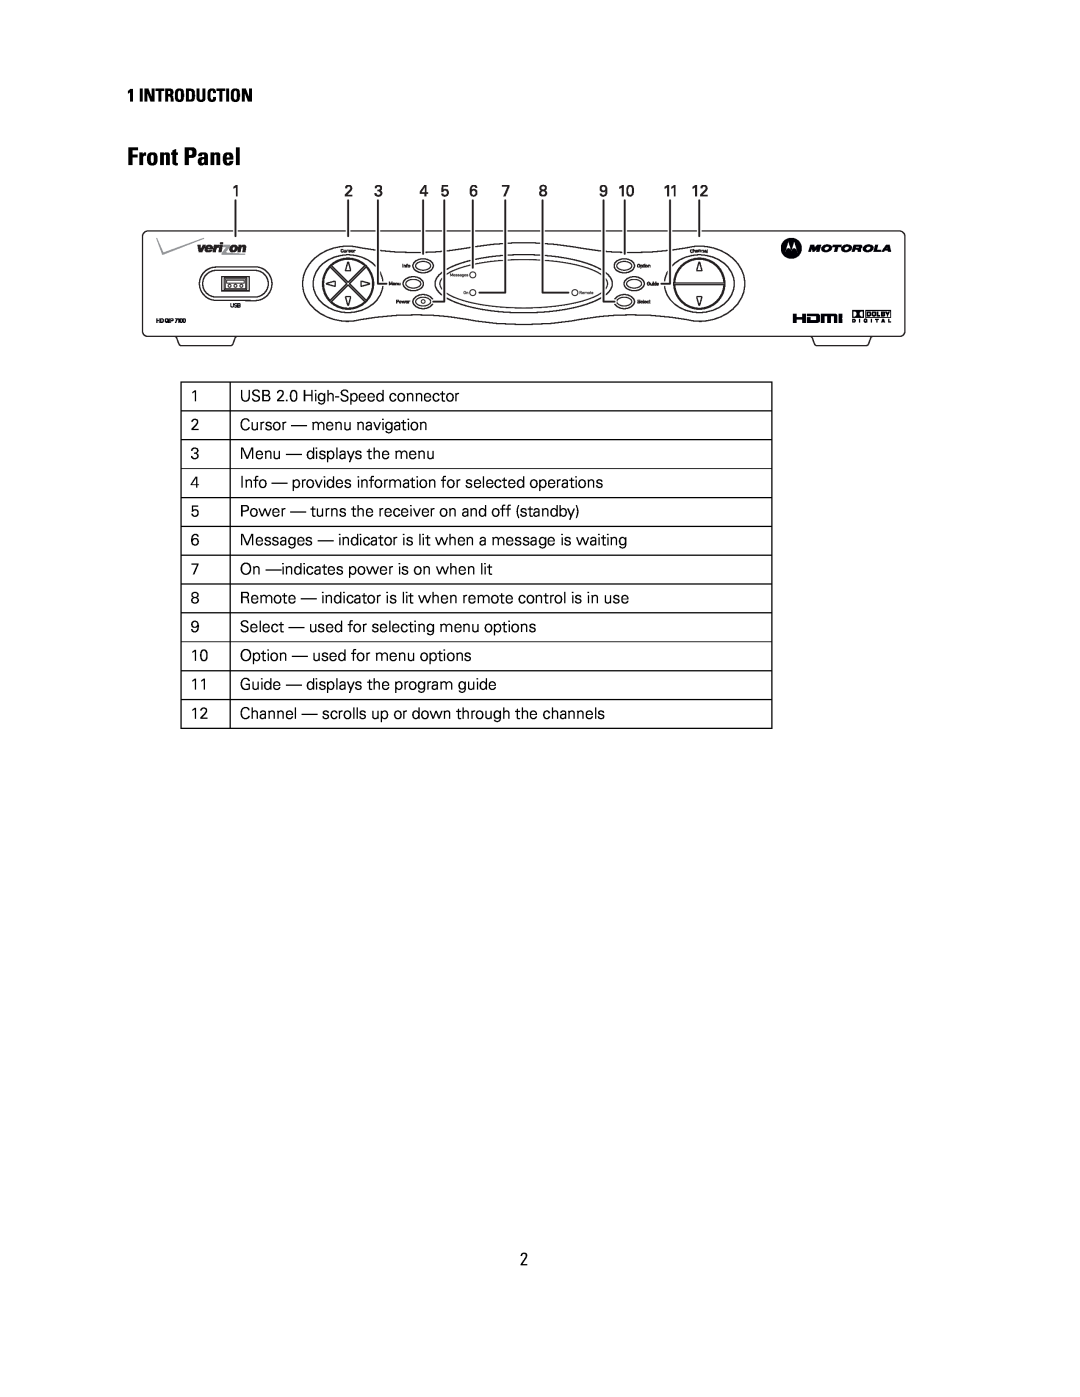 Motorola QIP7100 operation manual Front Panel, Introduction 